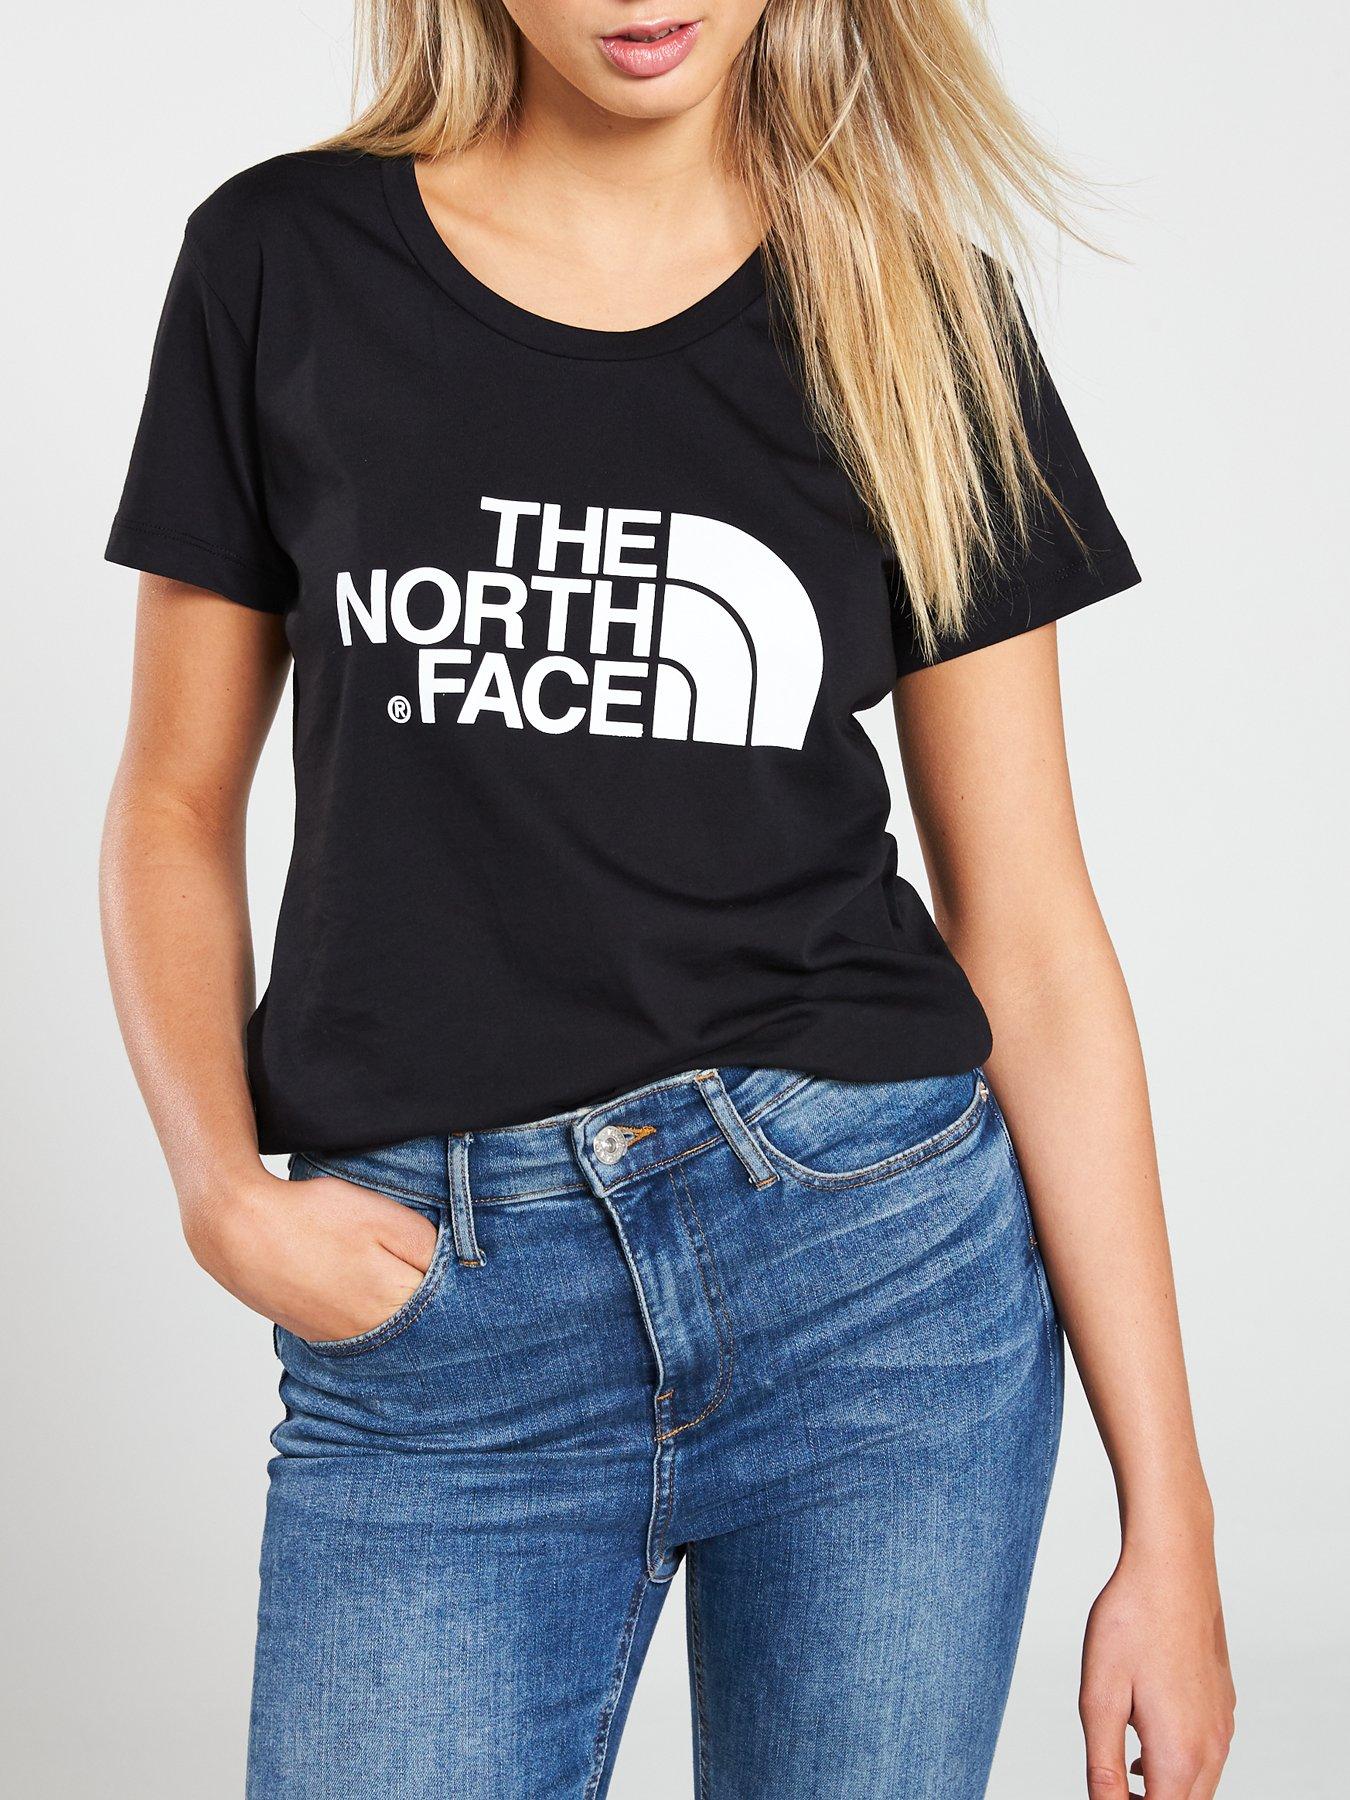 the north face shirts & tops